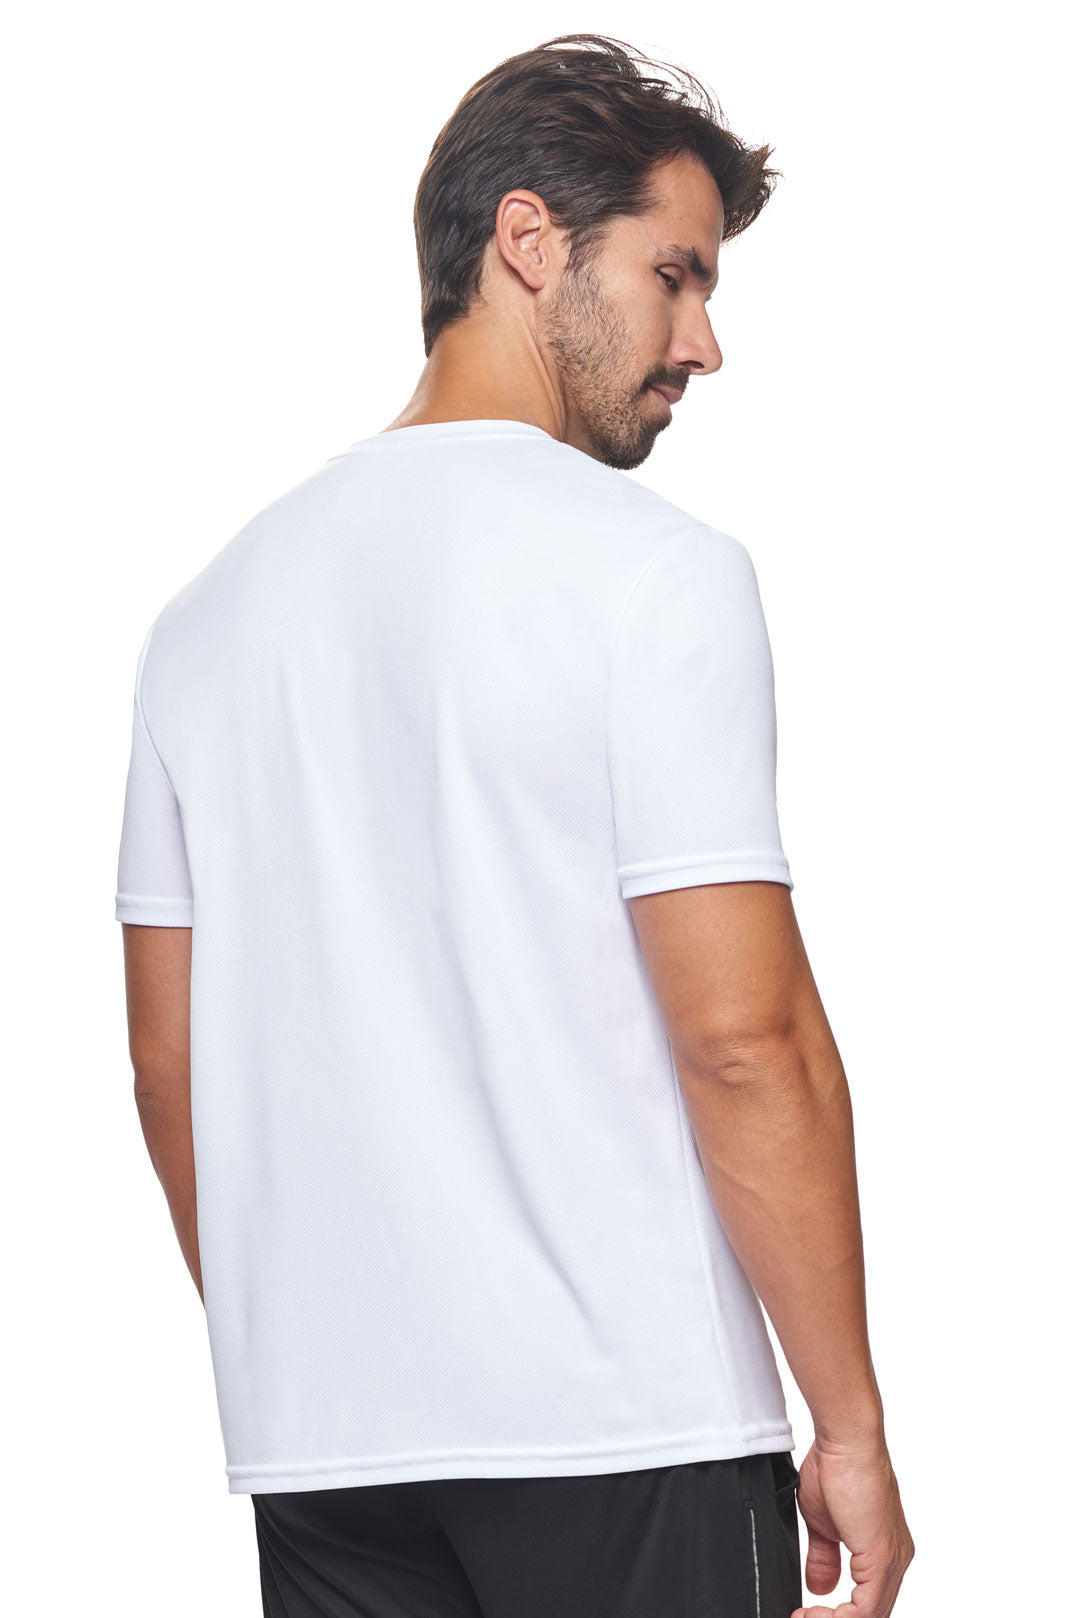 Expert Brand Wholesale Men's Oxymesh Tec Tee Performance Fitness Running Shirt in white image 3#white